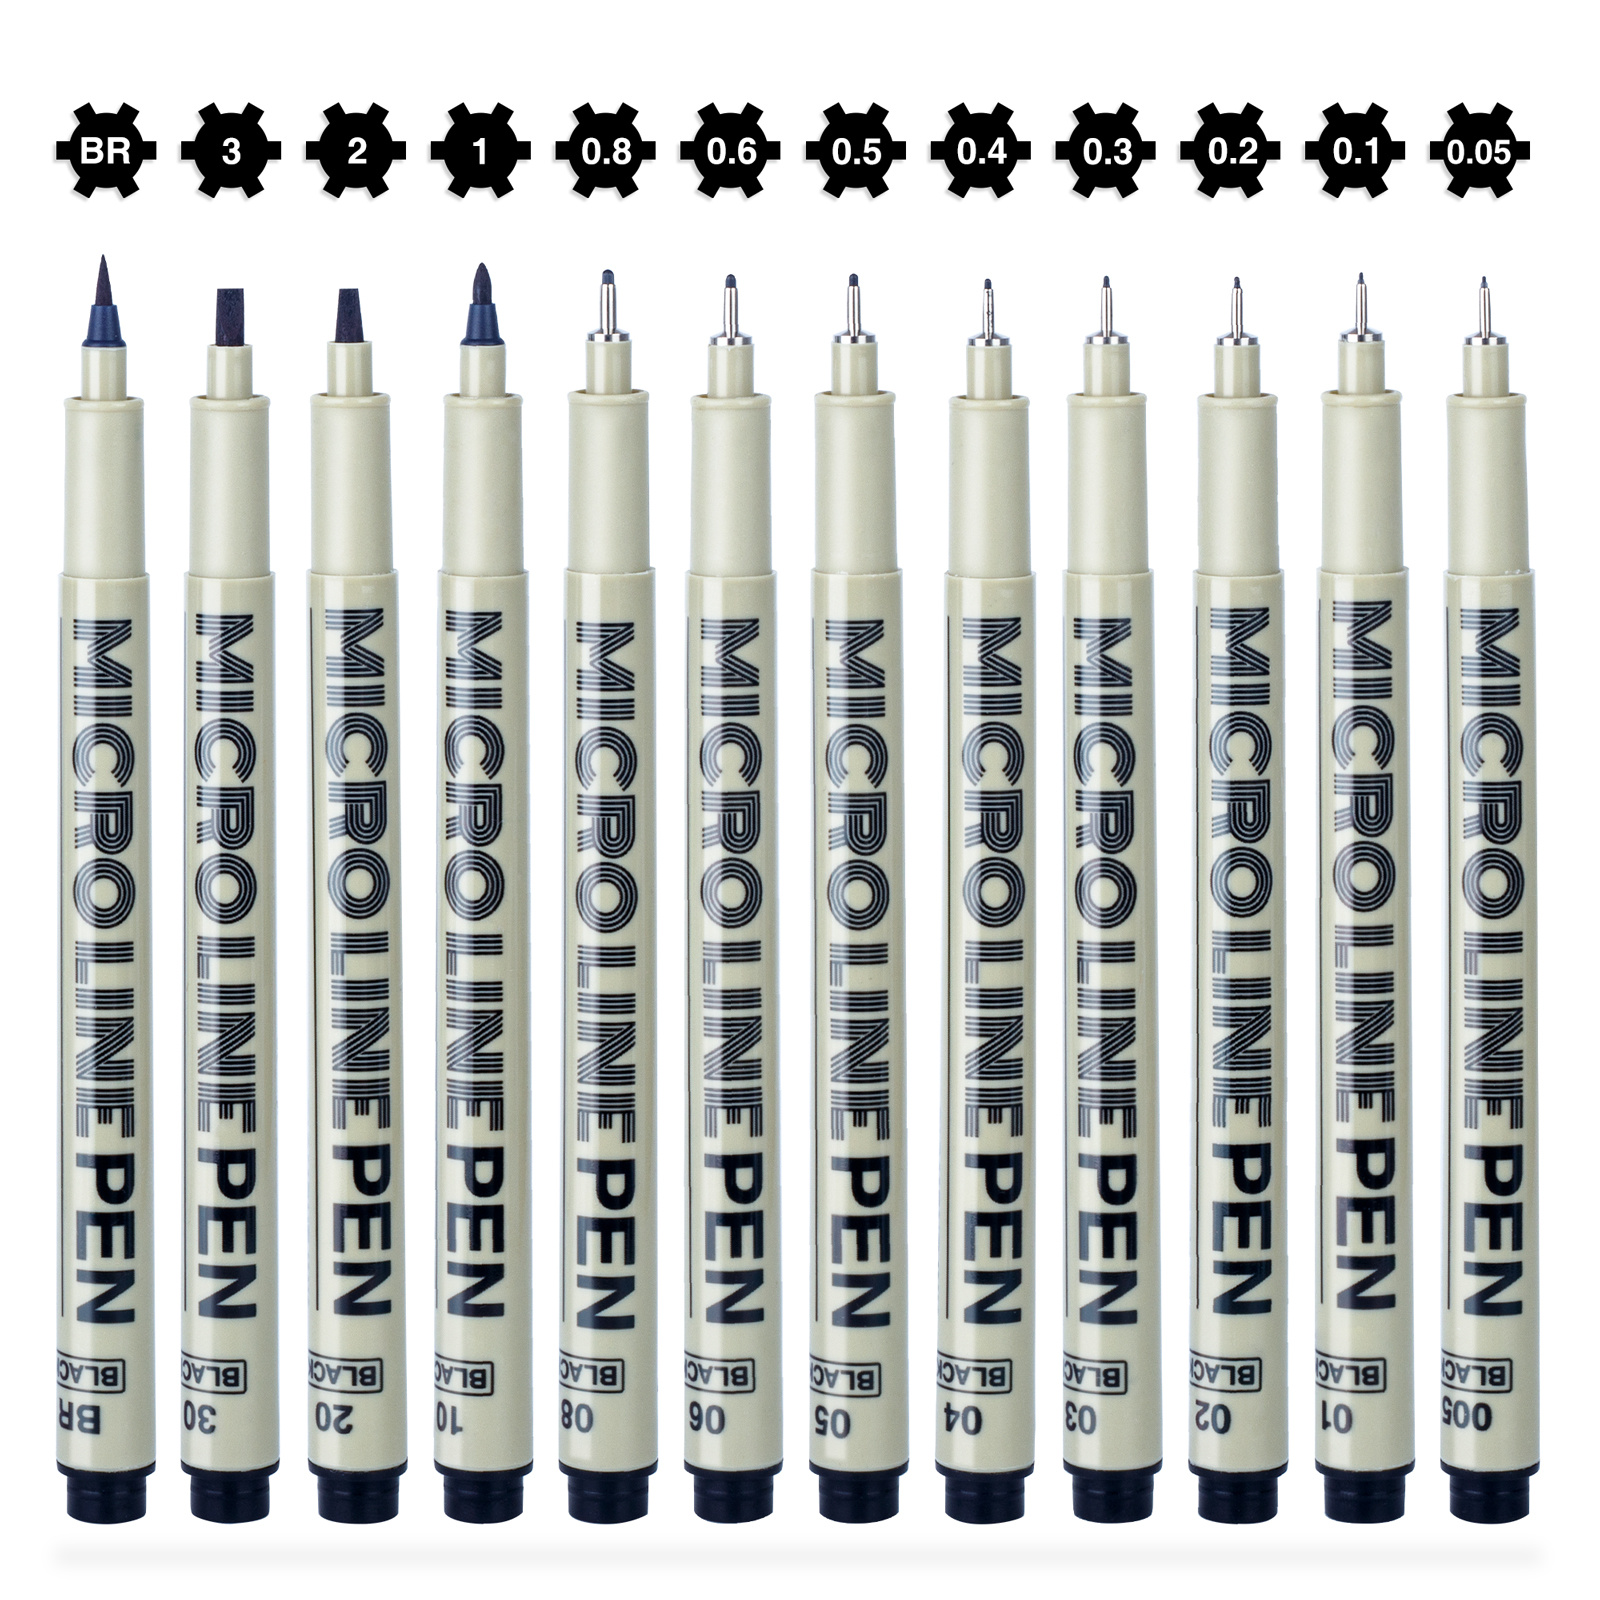 Toptime Micron Fineliner Pens, 12 Pack Micro Pen Set Black, Technical  Drawing Pens for Artist No Bleed Calligraphy Pens, Archival Ink Brush Pen  Art